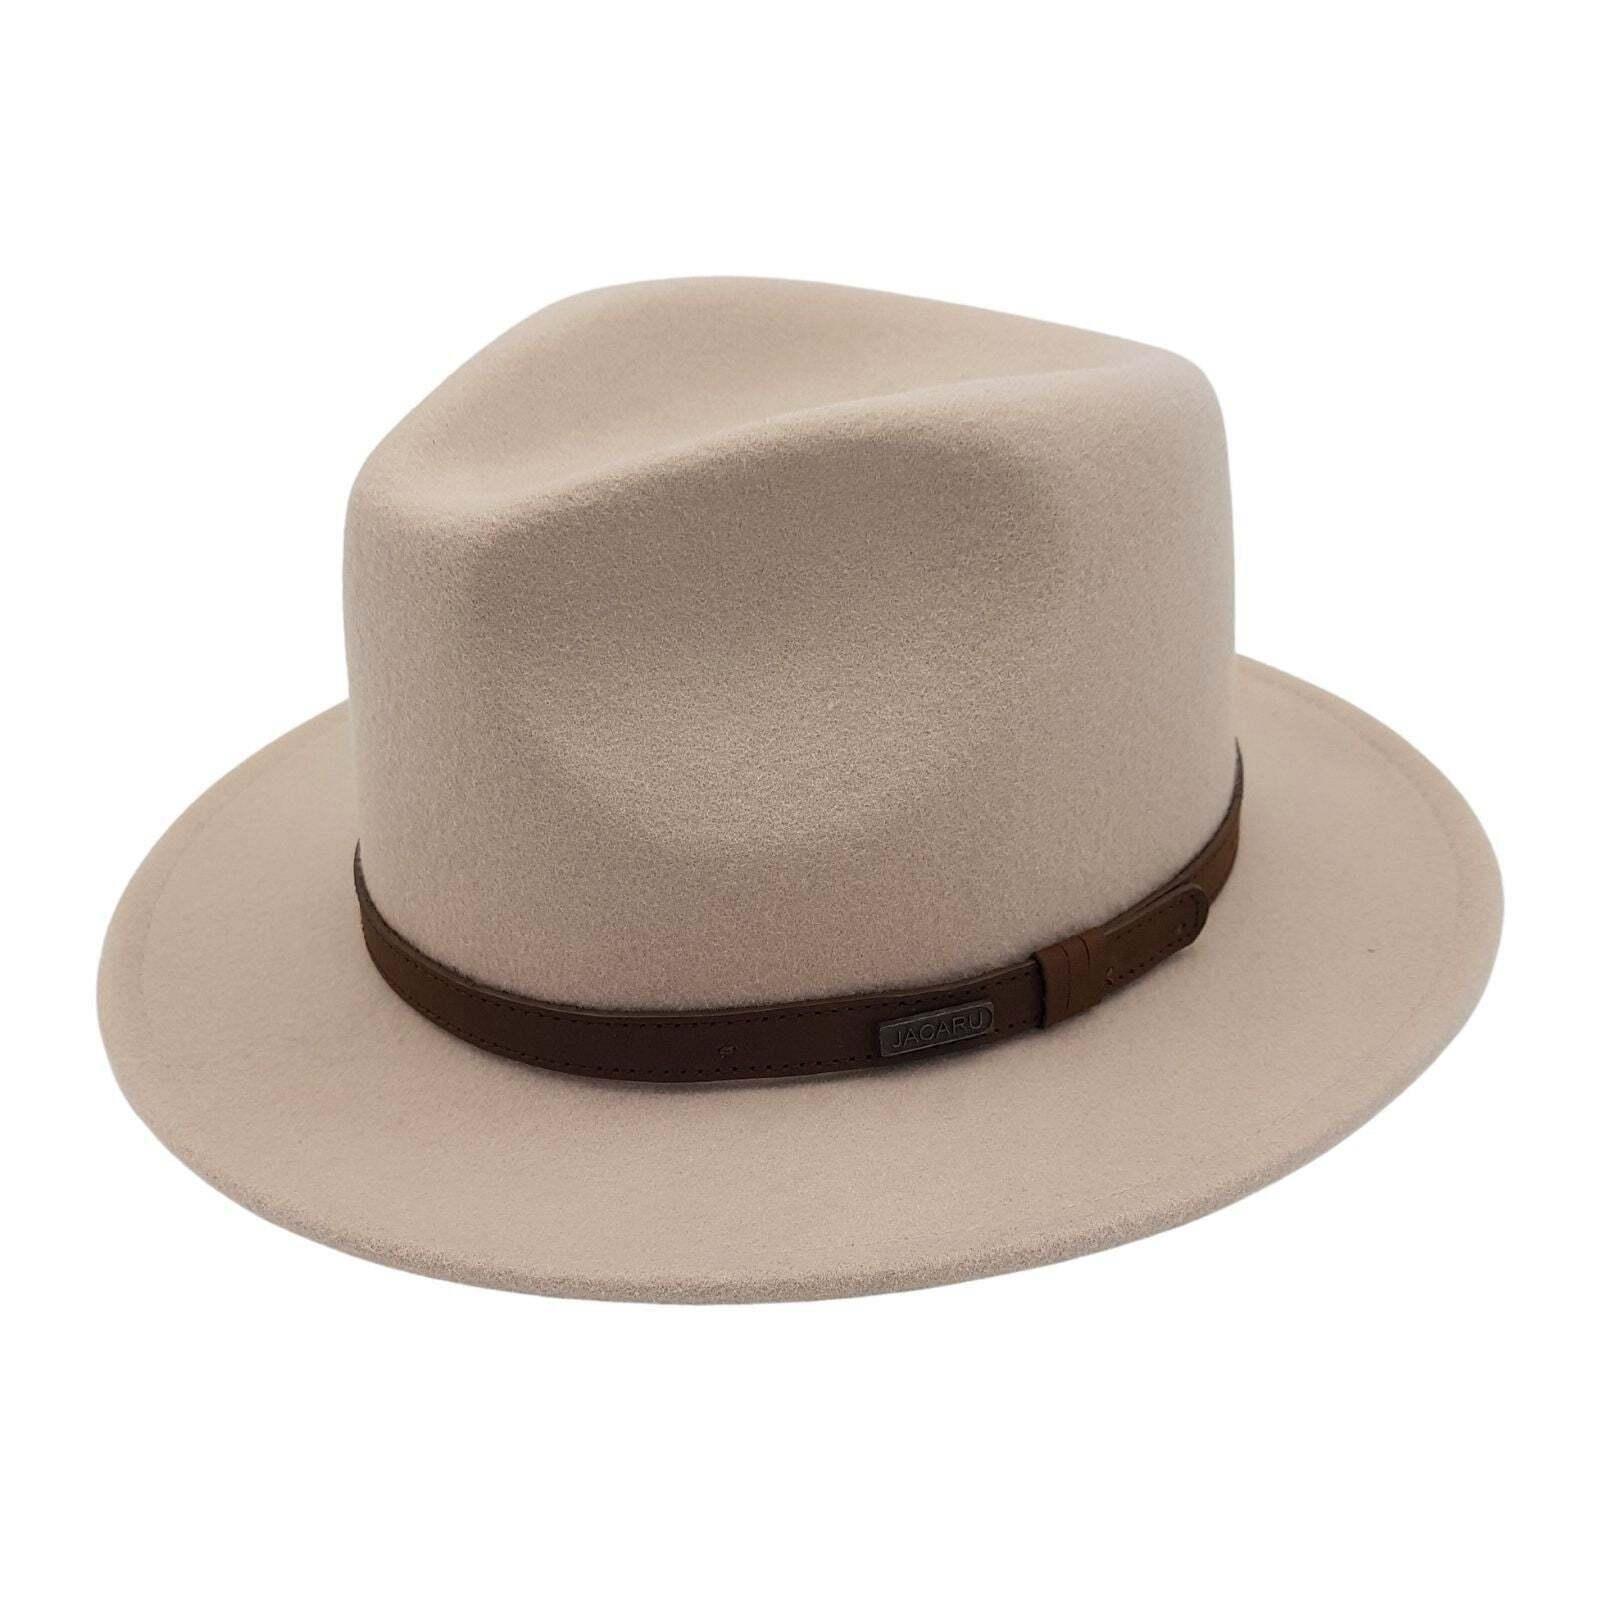 Jacaru 1851 Walkabout Wool Felt Fedora Hat Outback - Cream - Small